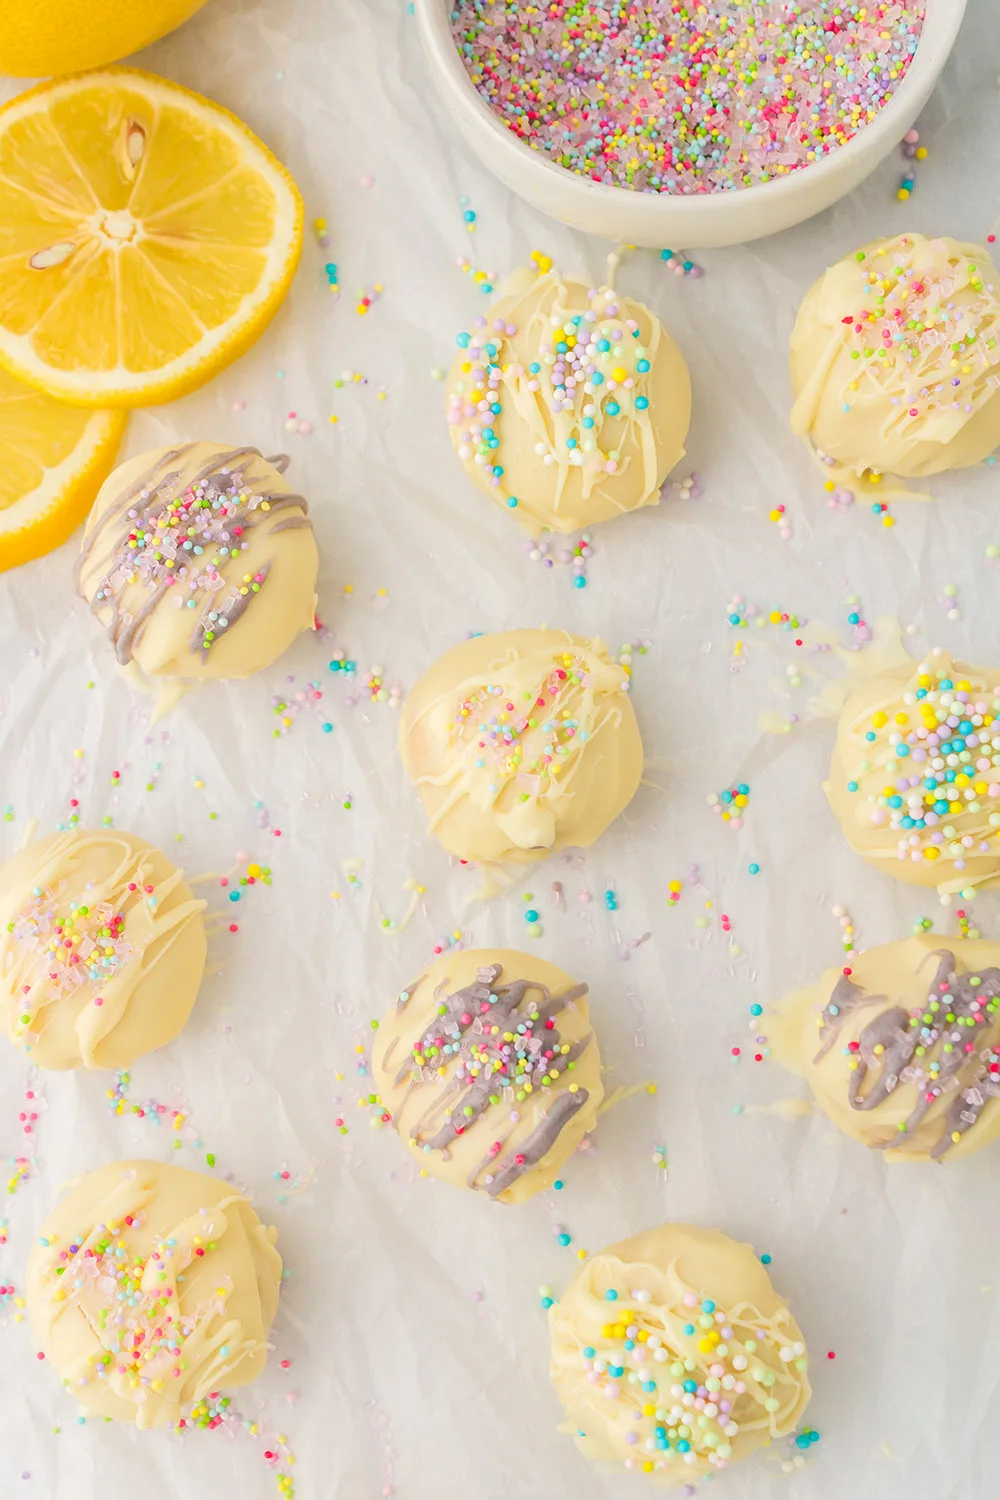 Lemon oreo balls topped with sprinkles on a baking sheet. 